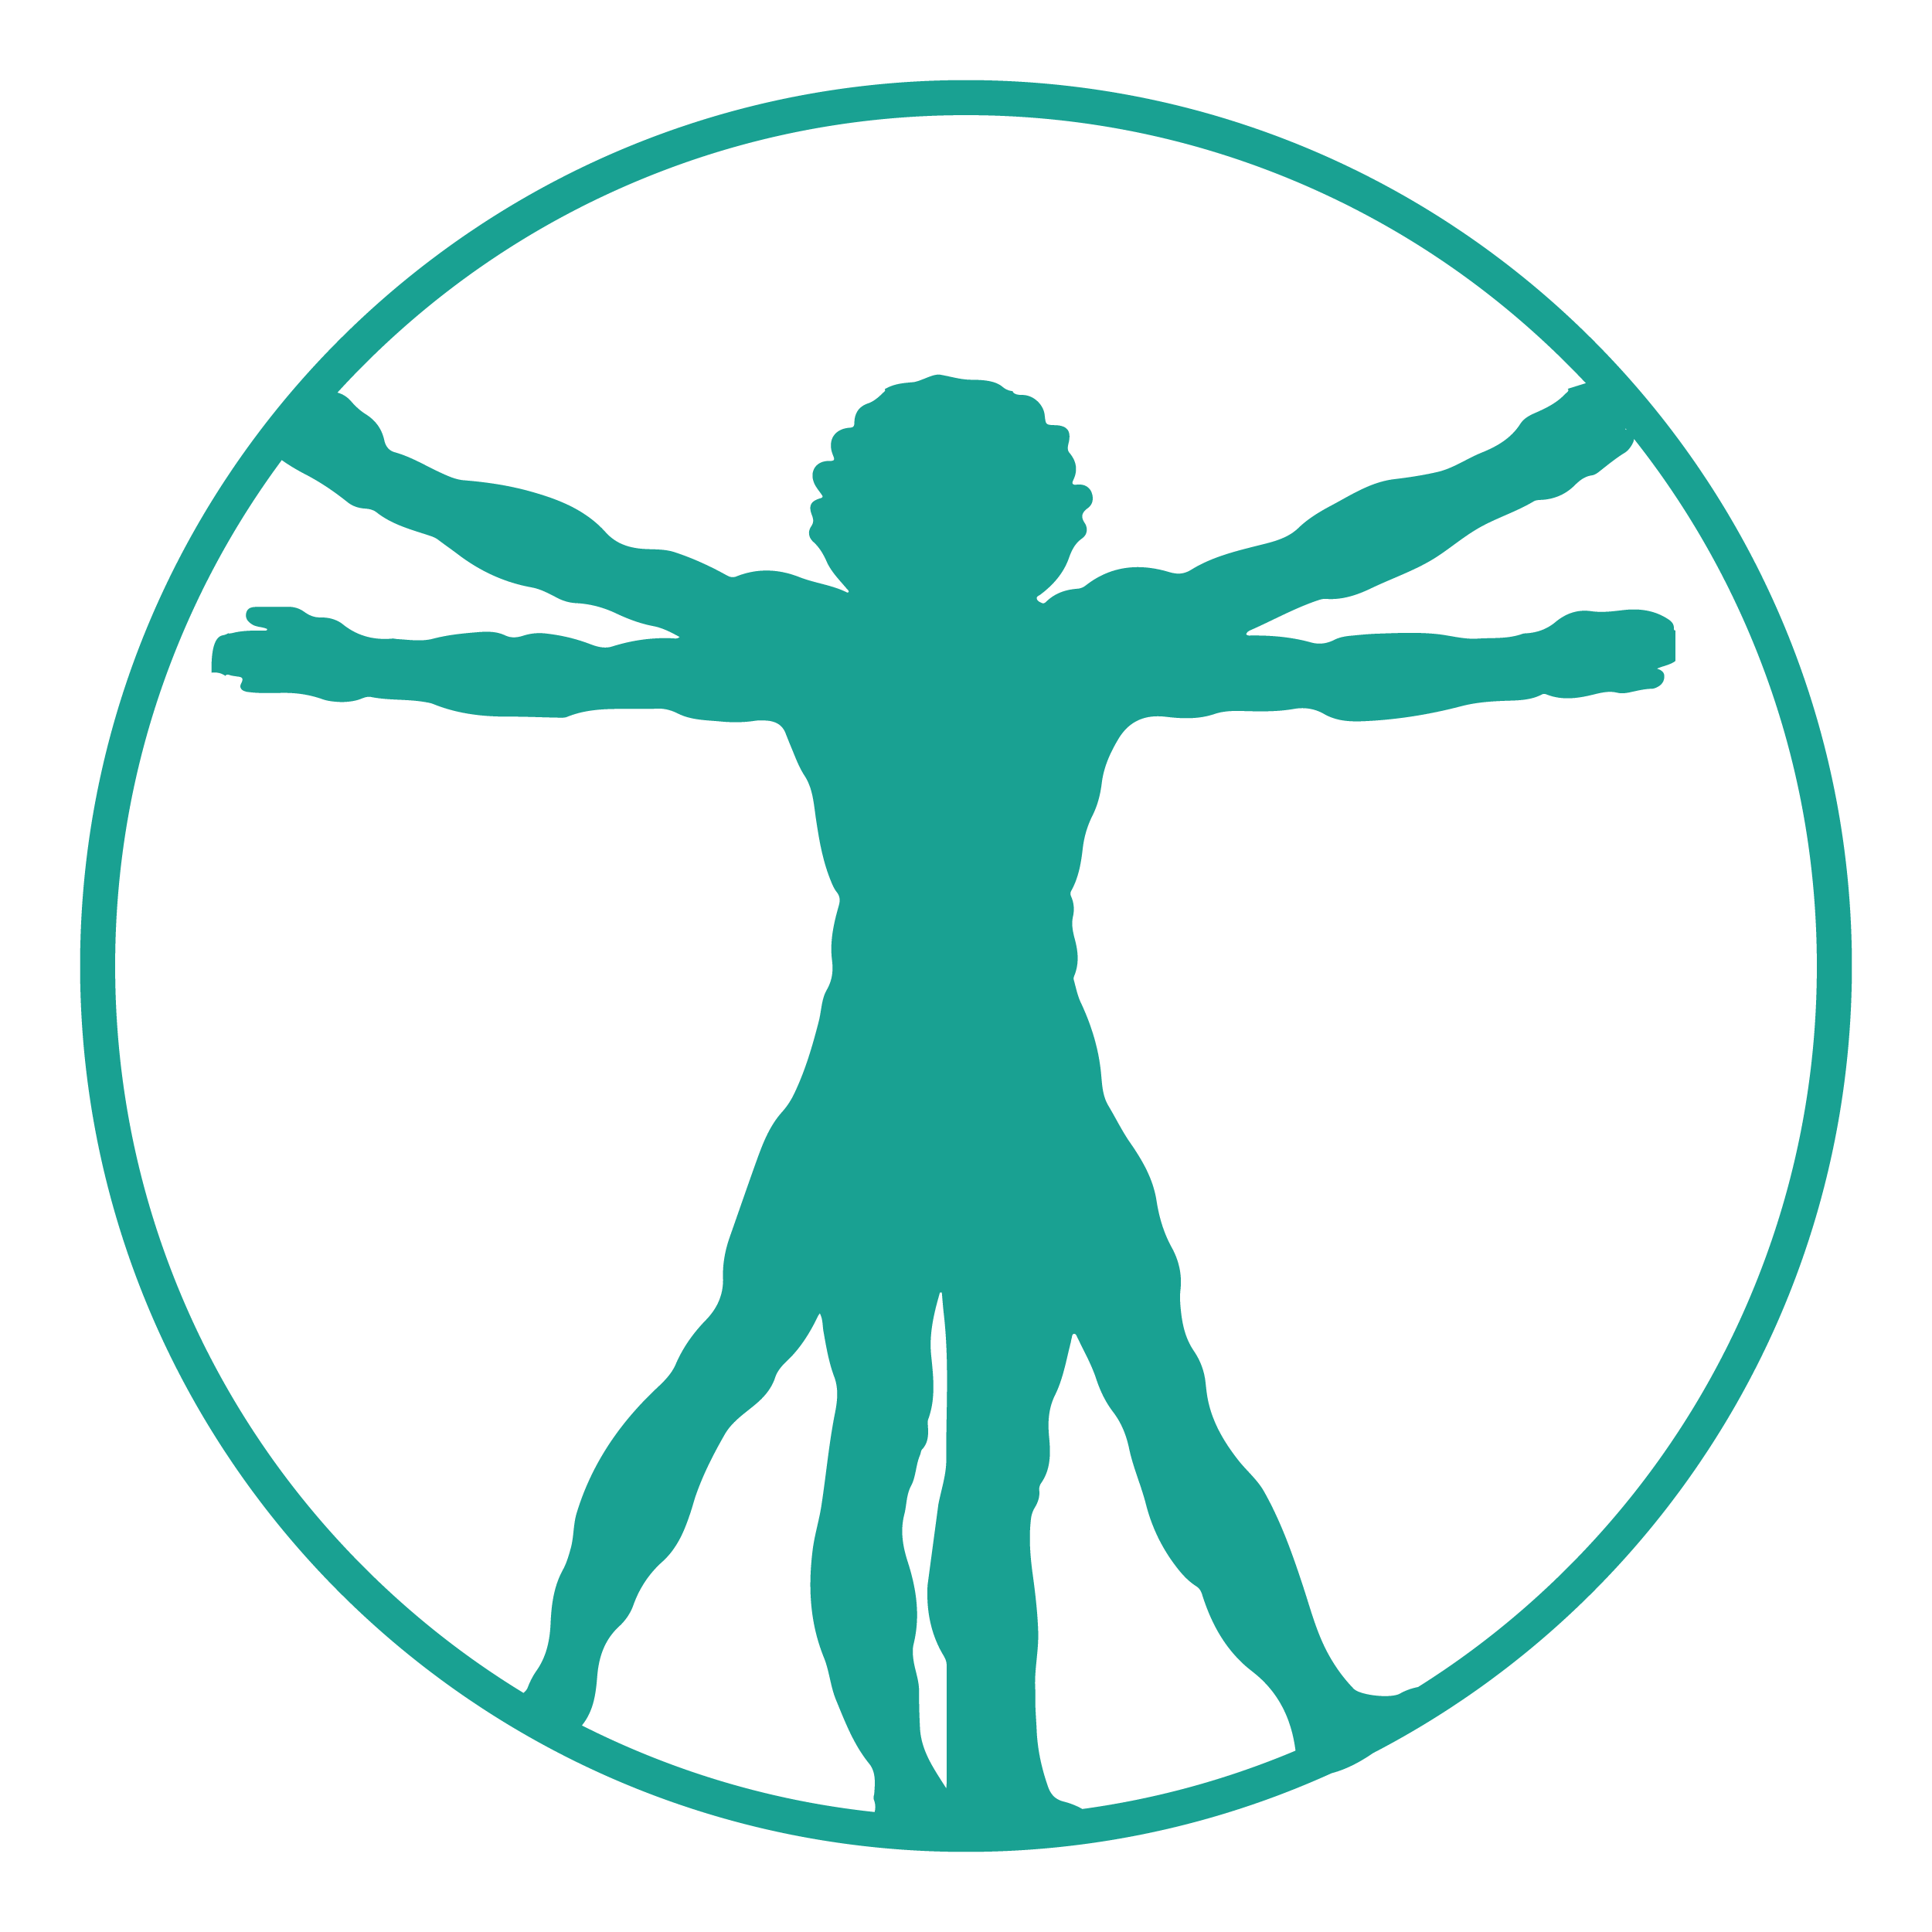 Vitruvian Man Logo photo - 1